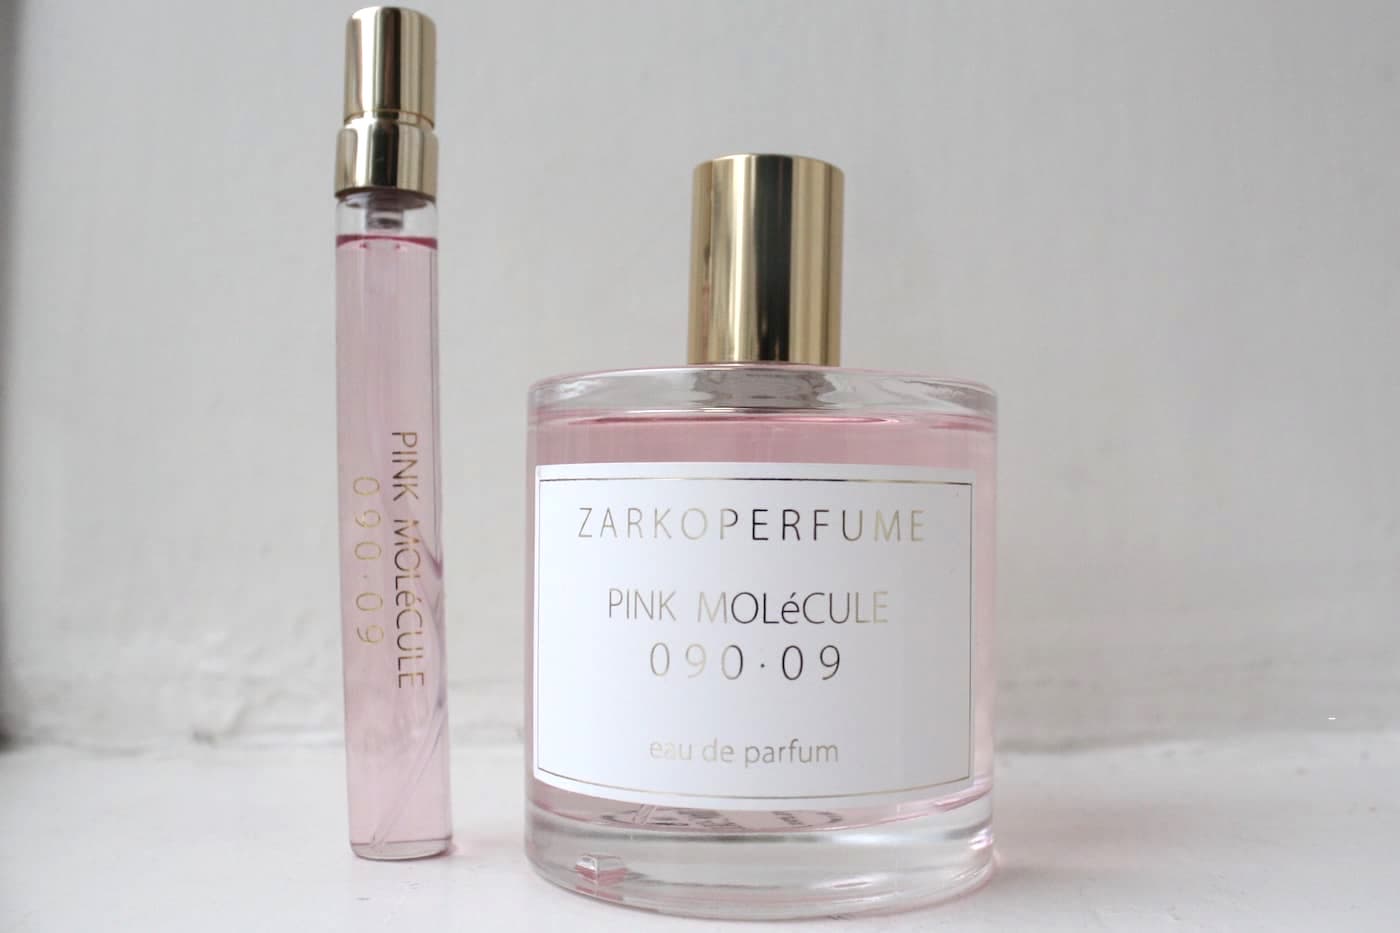 Pink molecule parfume and travel perfume